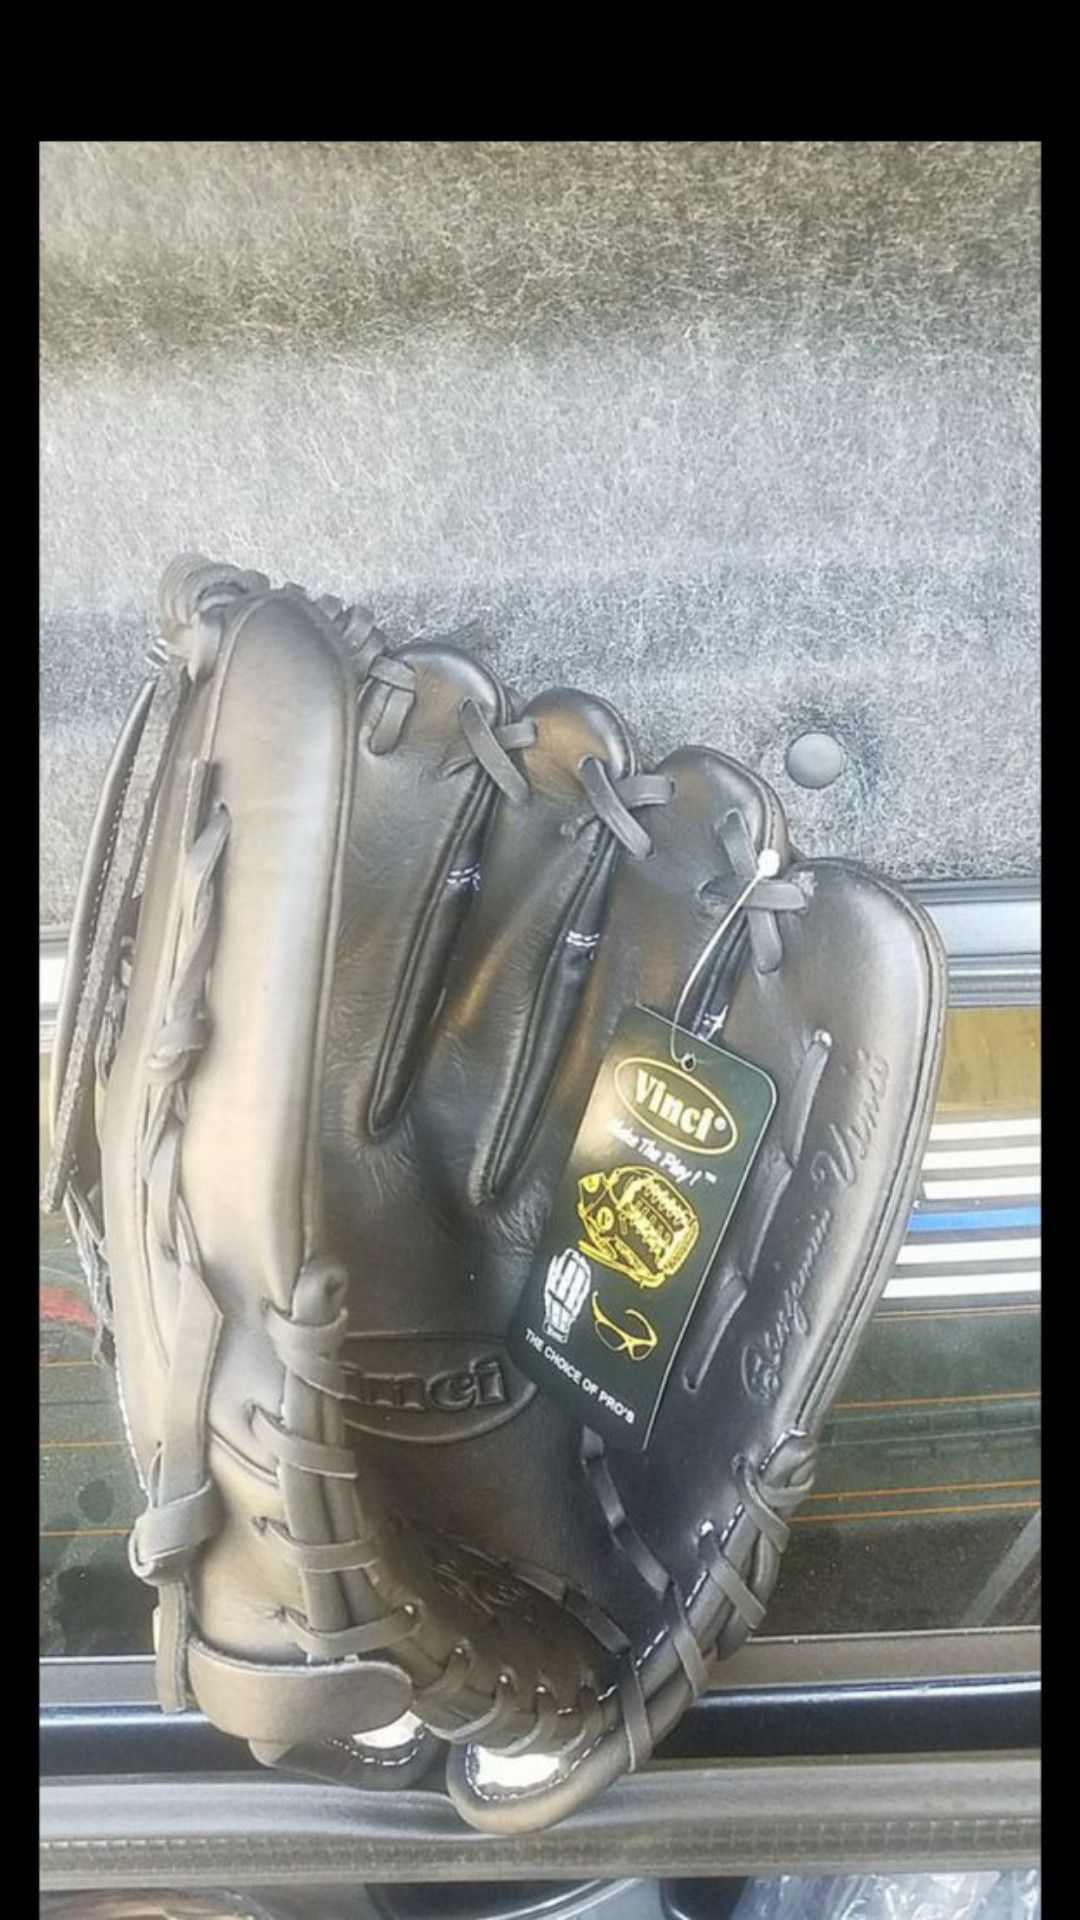 Baseball glove, outfielder, size 13